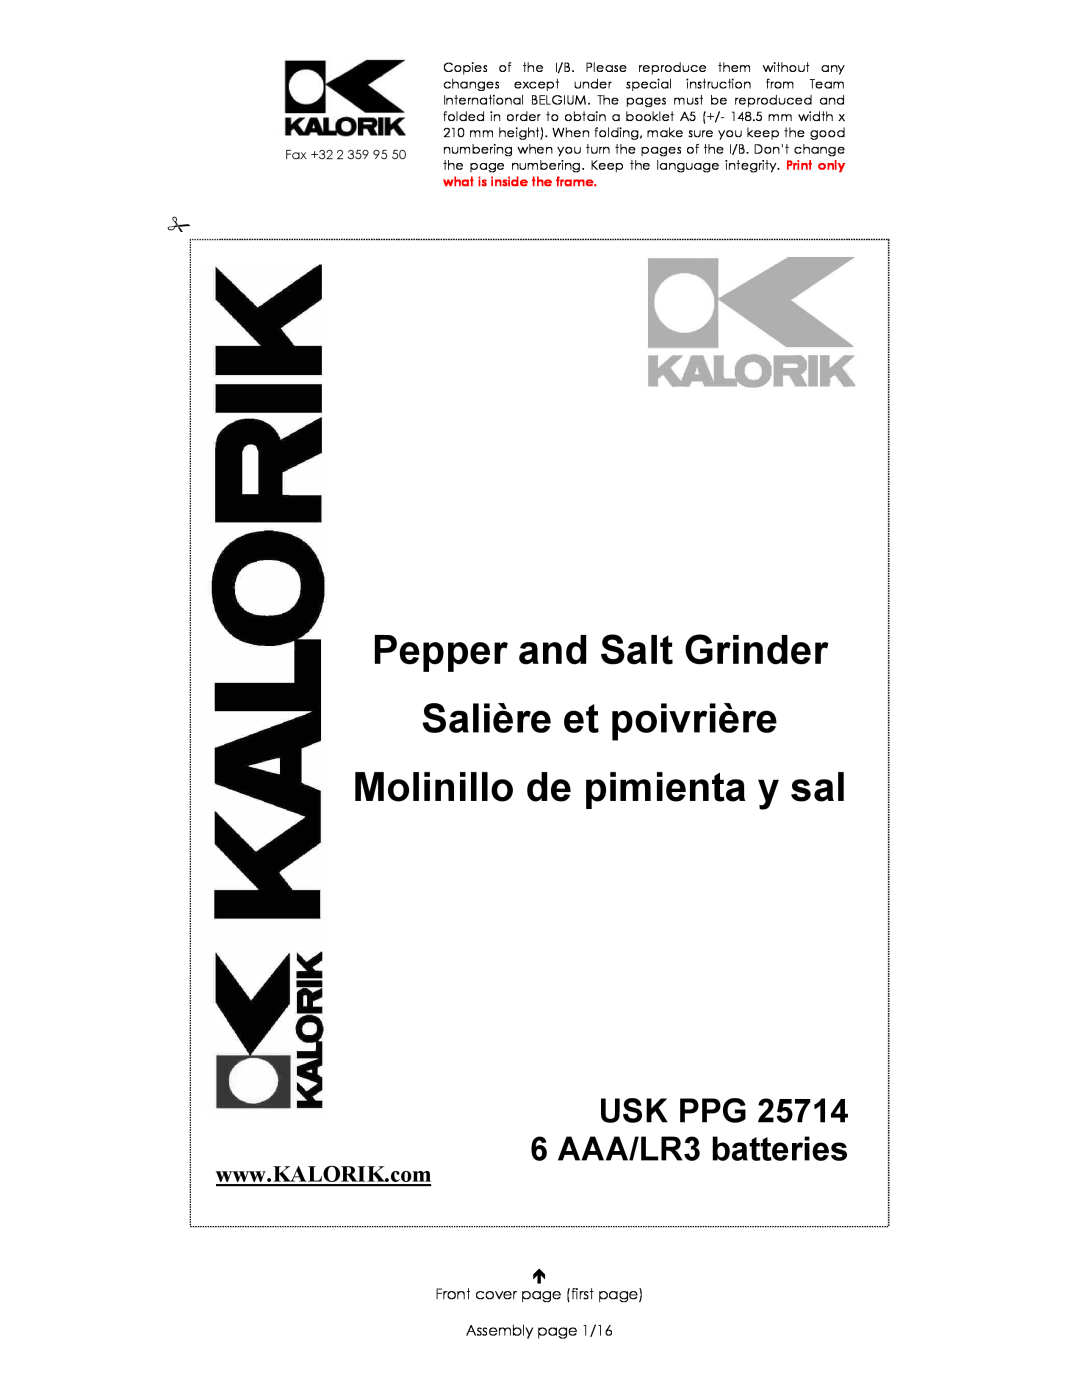 Kalorik USK PPG 25714 manual Pepper and Salt Grinder Salière et poivrière, Molinillo de pimienta y sal, Usk Ppg 